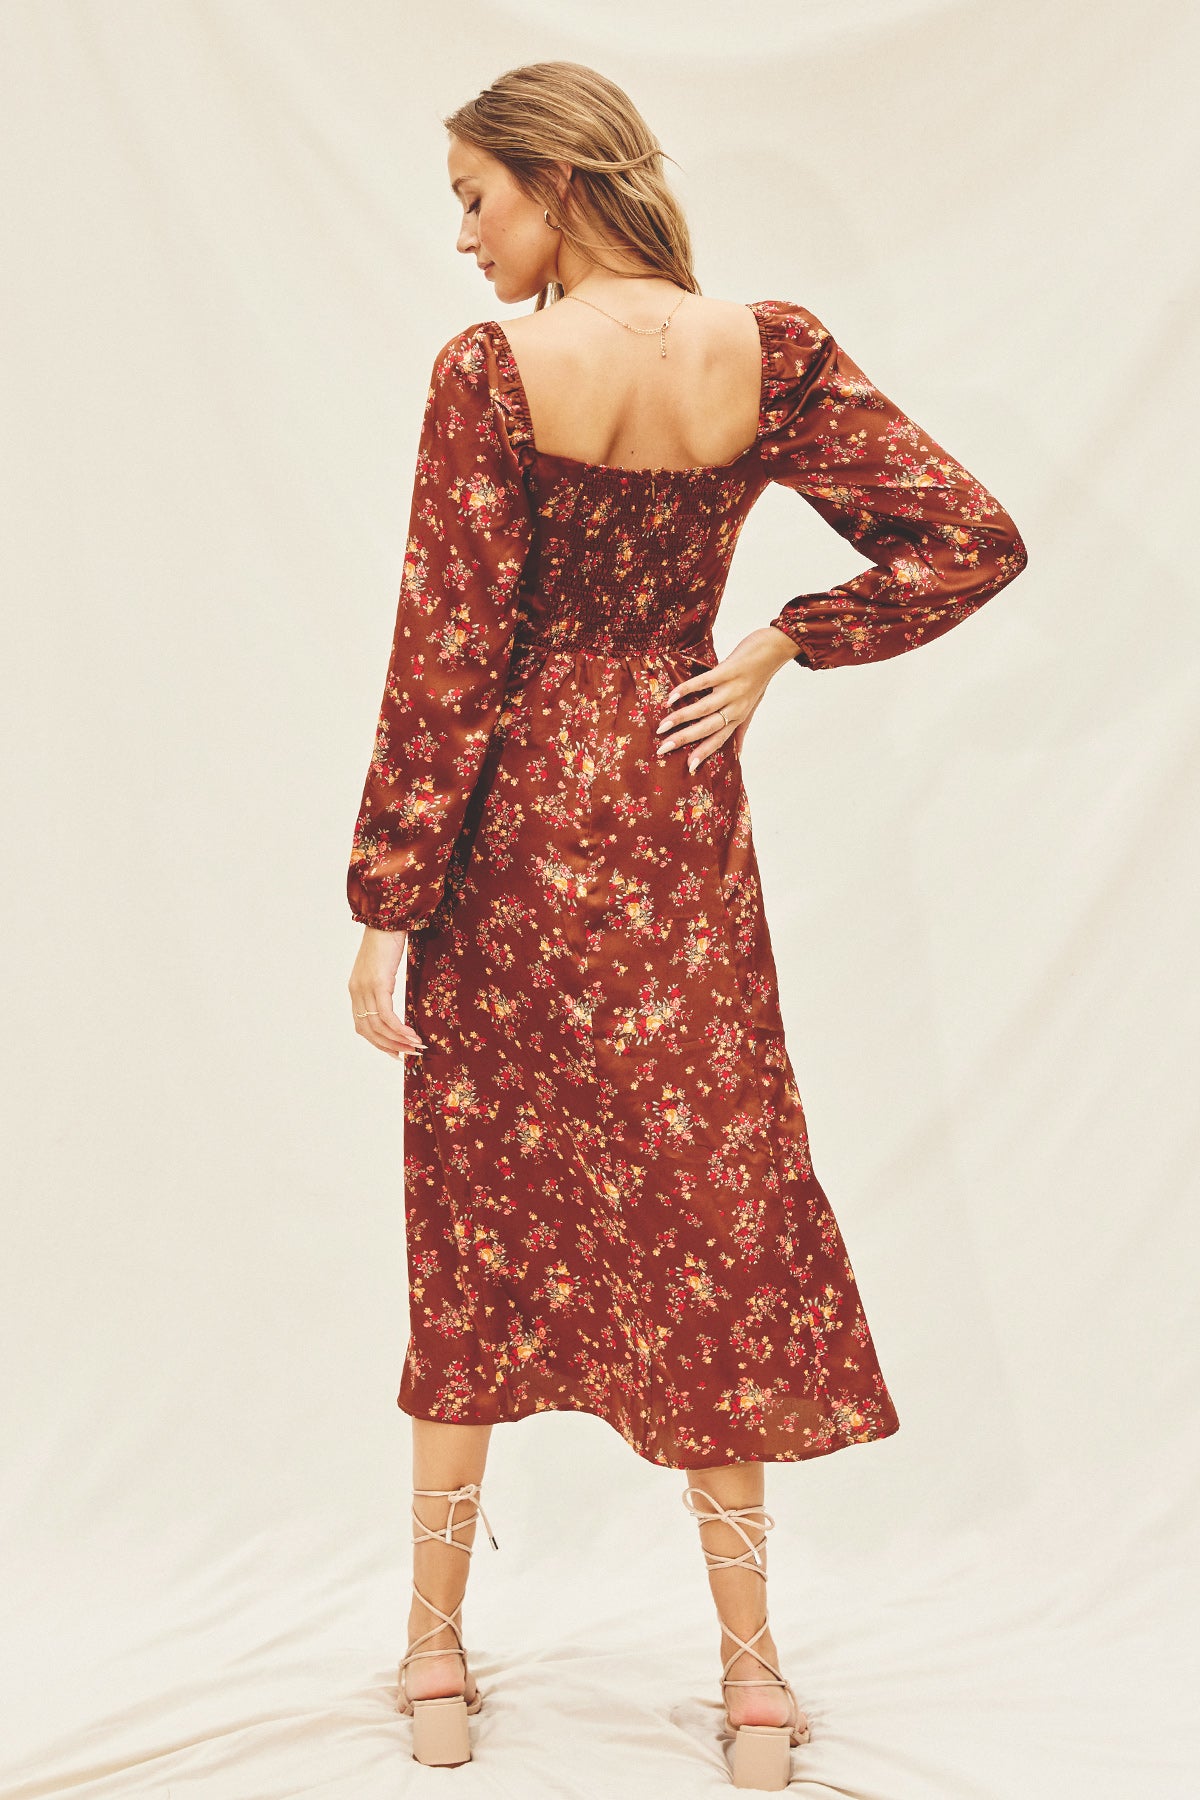 Brown Floral Midi Dress - FINAL SALE